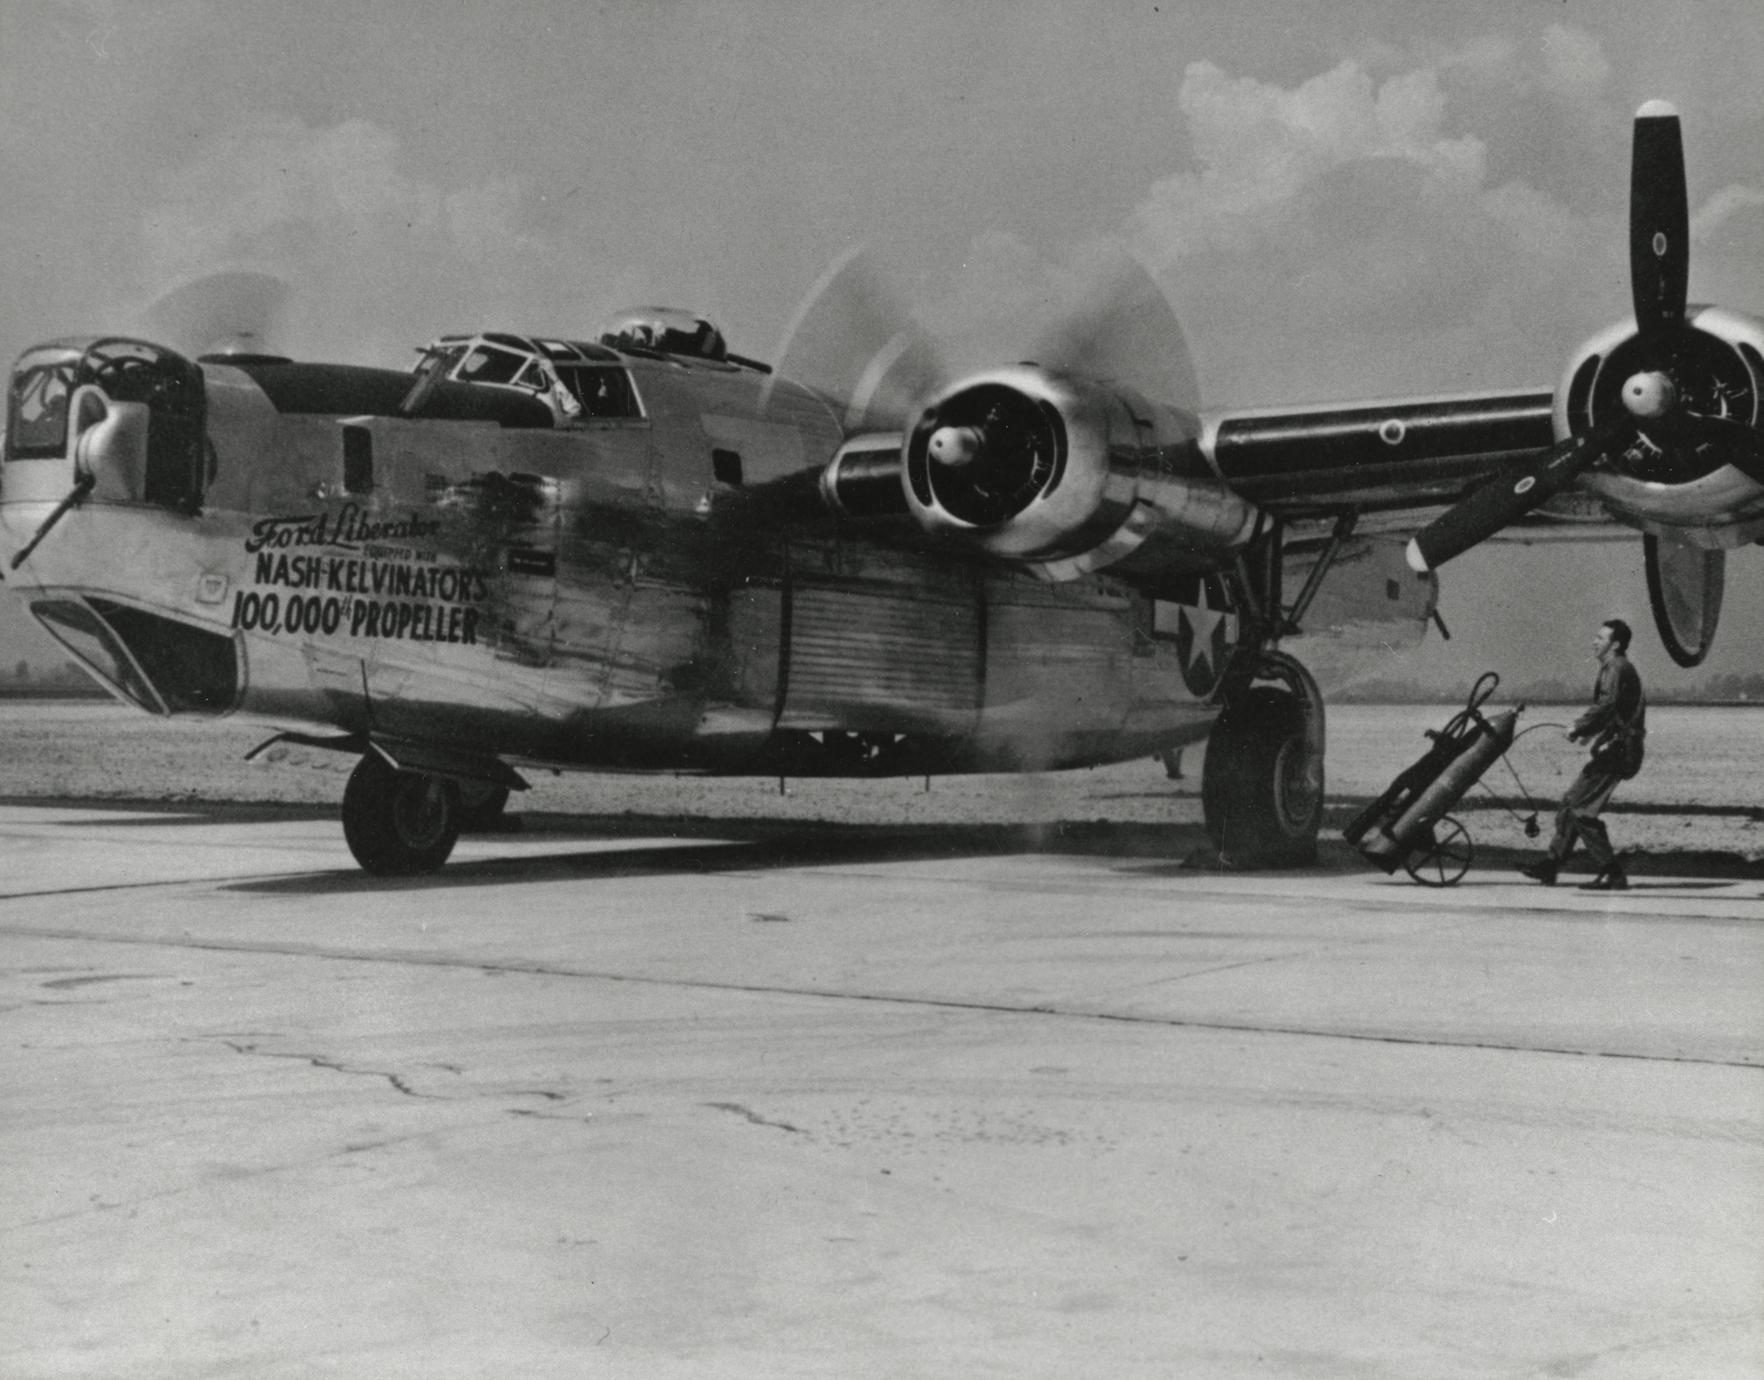 The 100,000th Nash-Kelvinator propeller on a World War II bomber